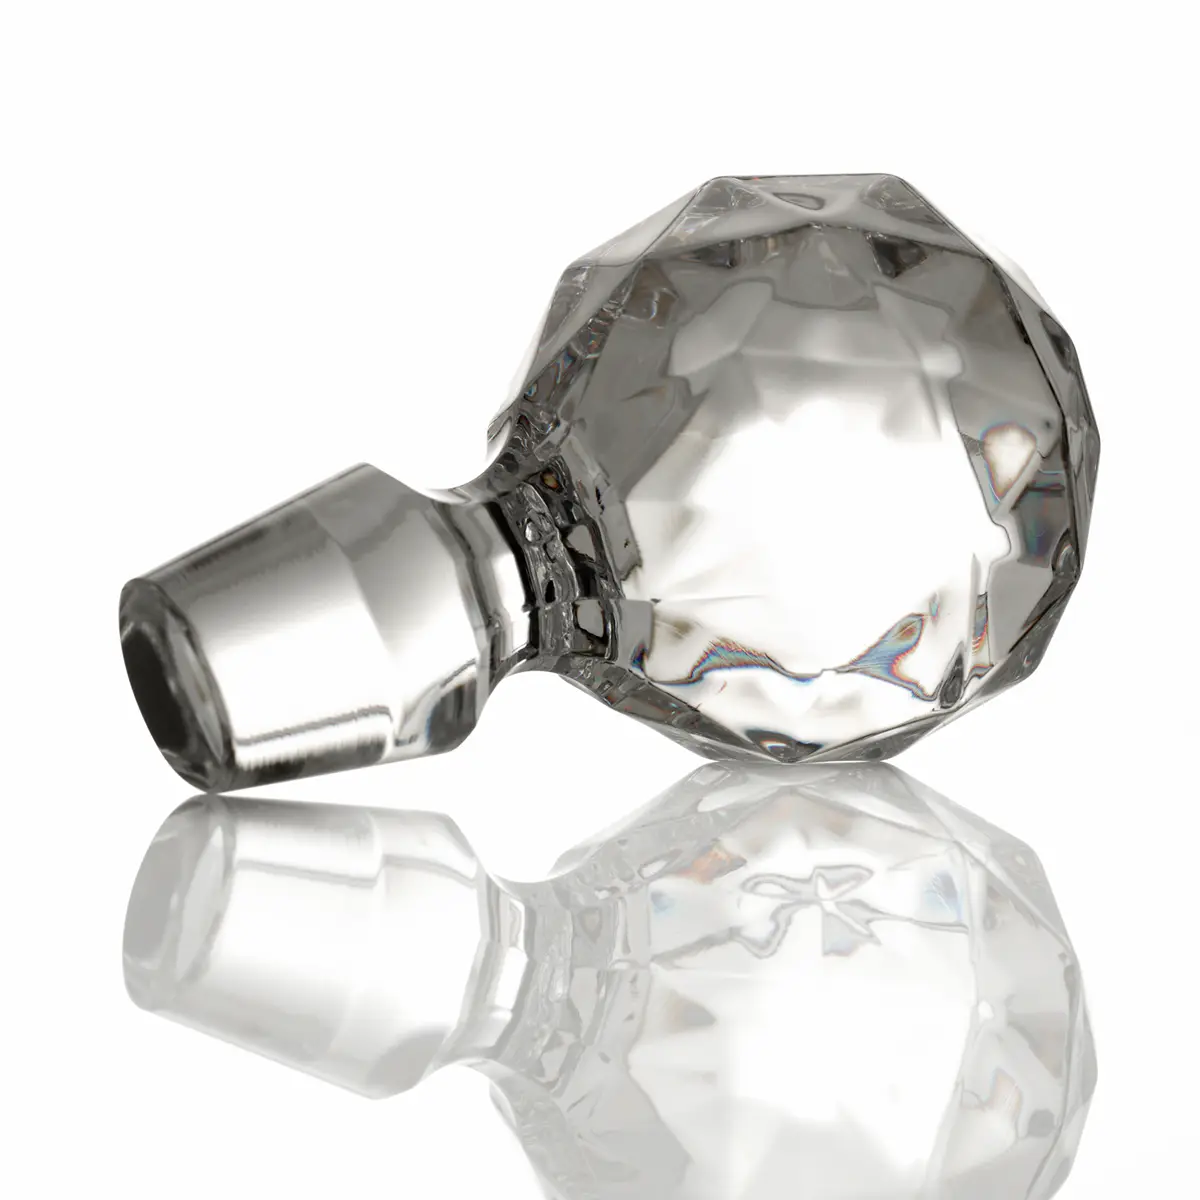 Classic Collection Kristall Whisky Set - Karaffe & 2 Gläser - Handgefertigt aus Kristallglas